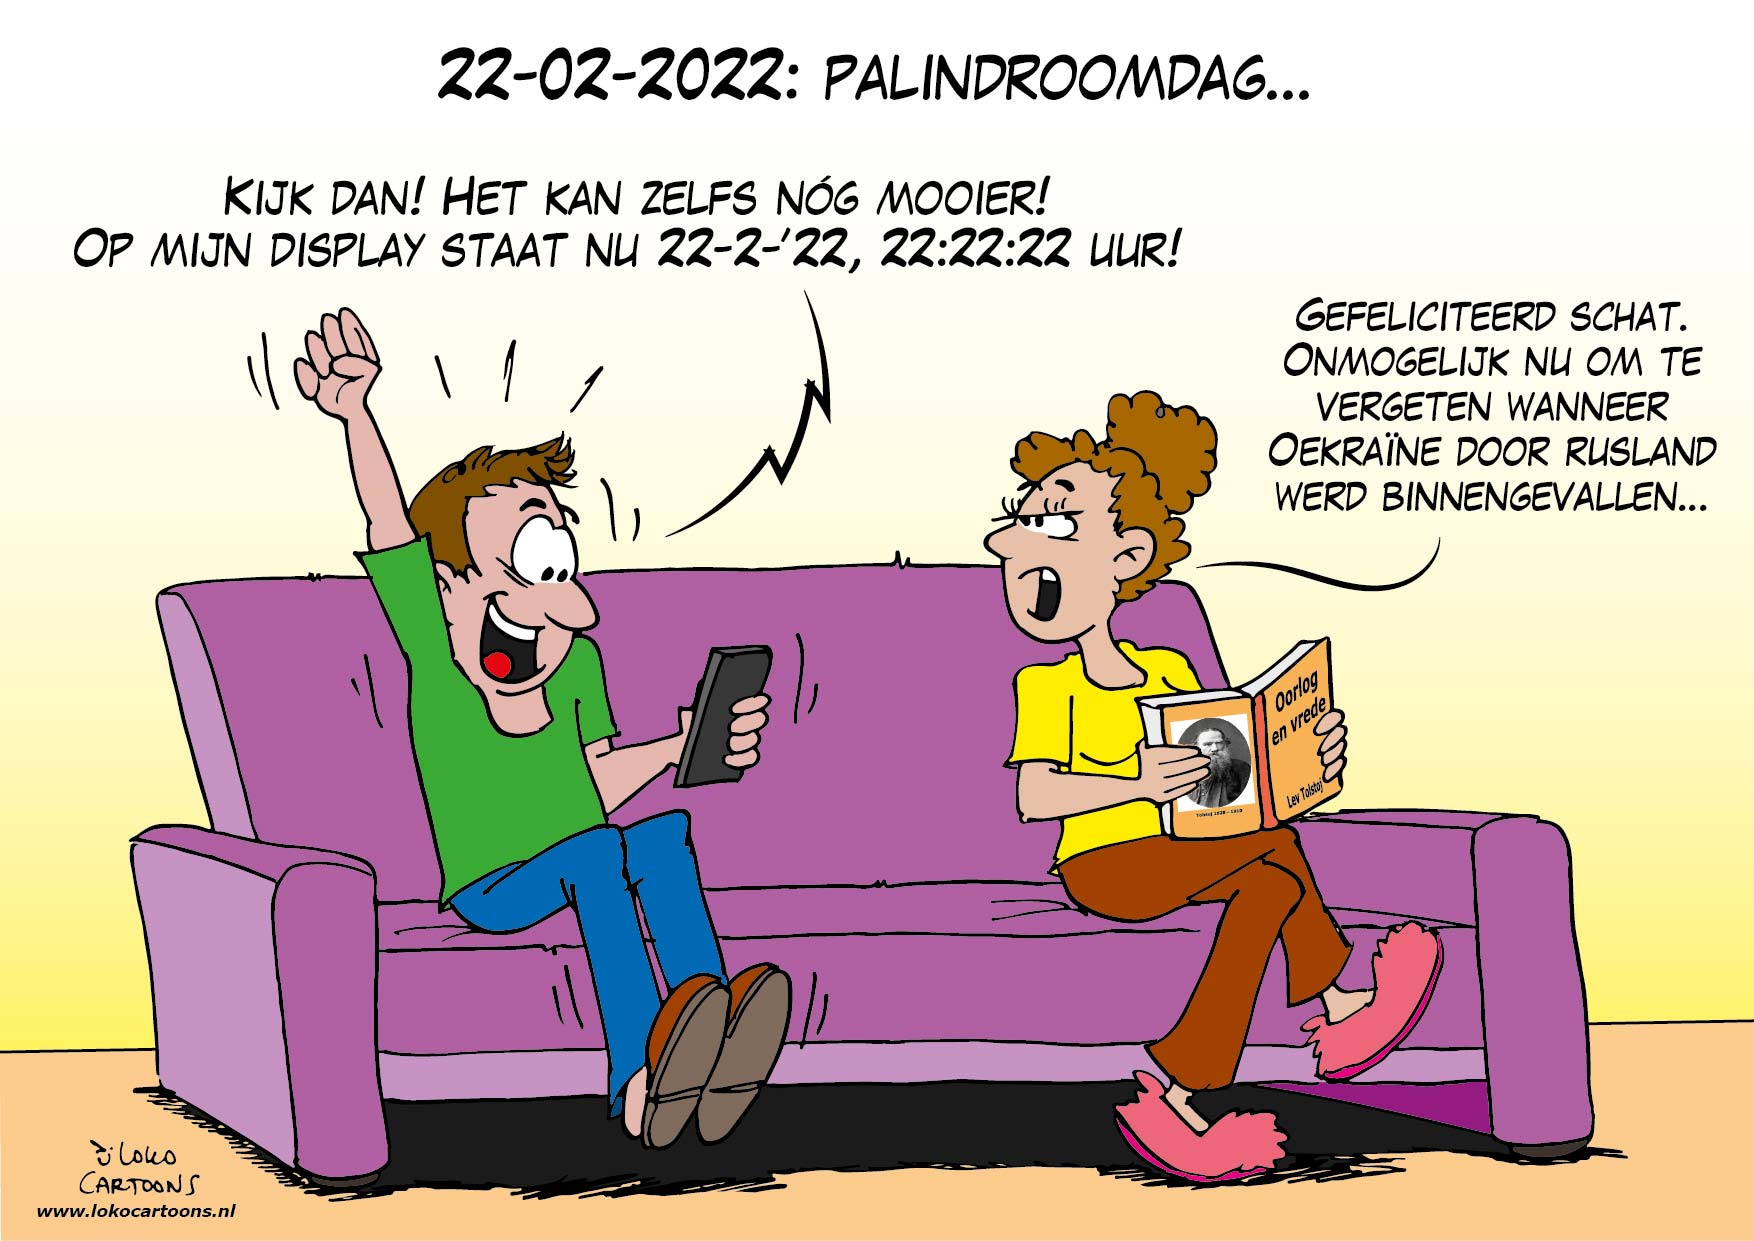 22-02-2022: palindroomdag…